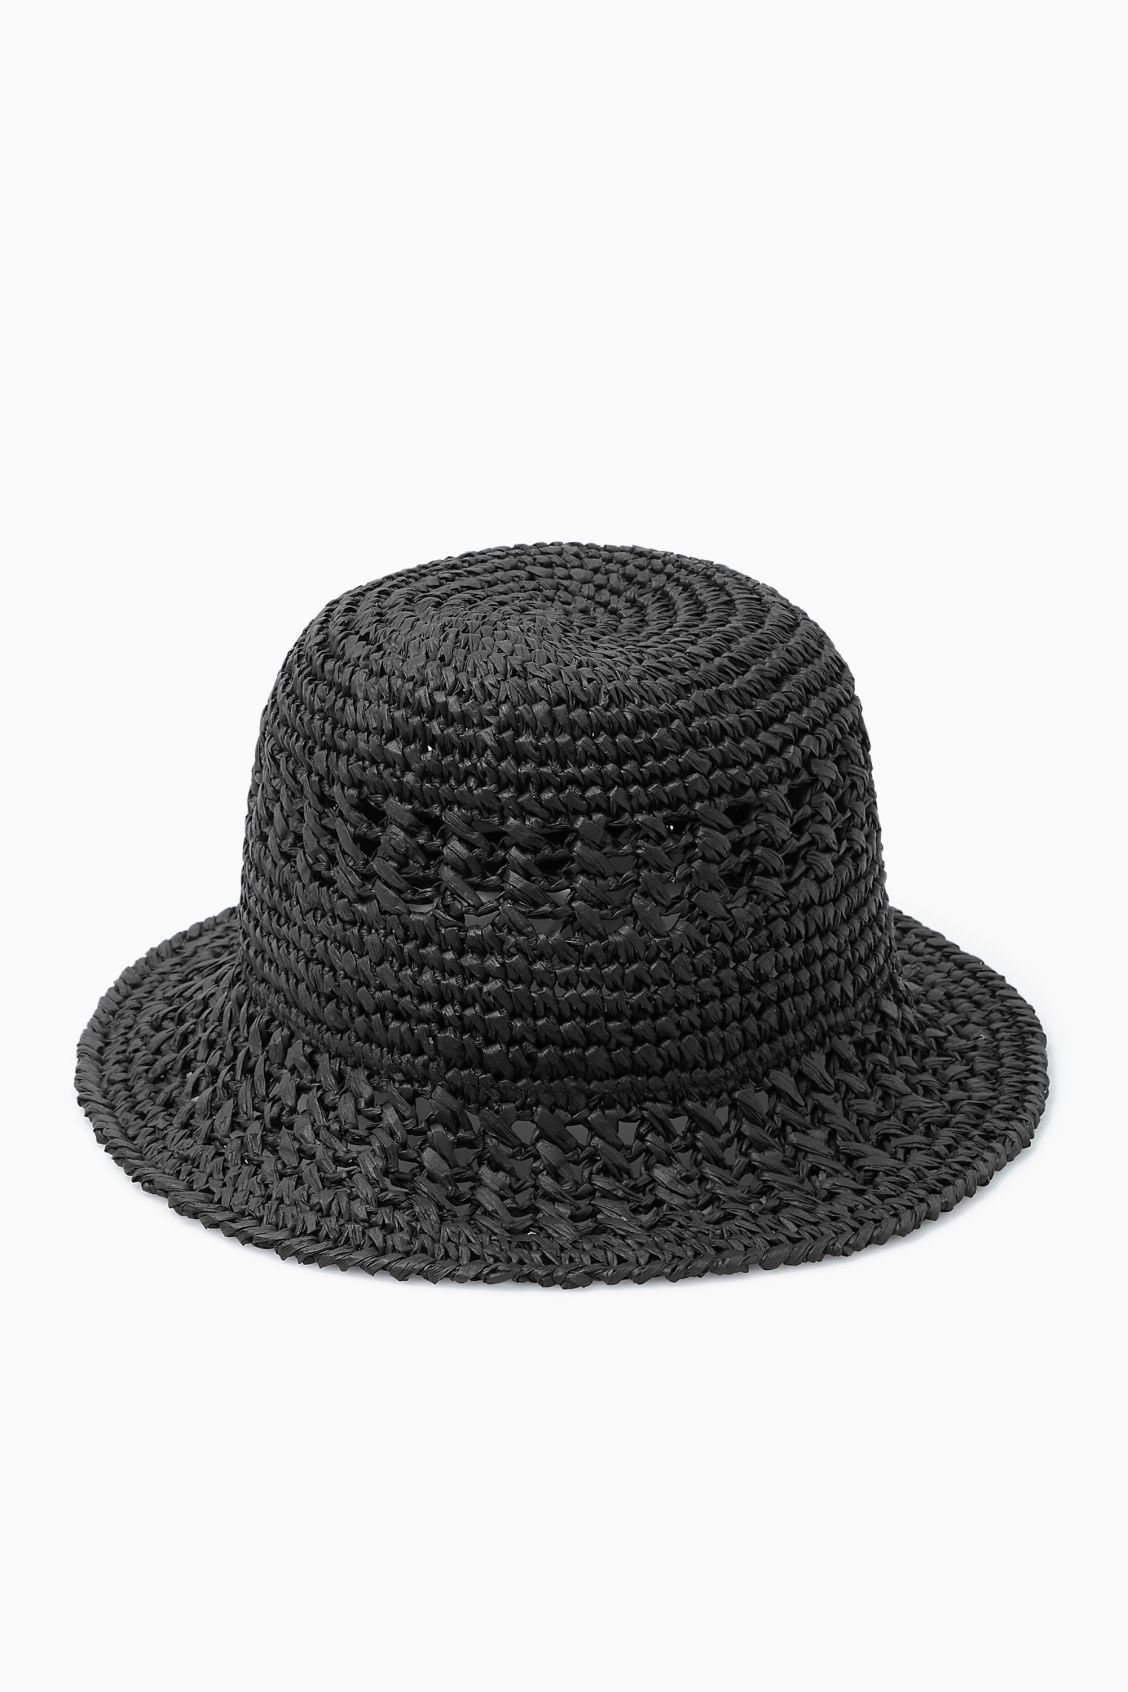 CROCHETED STRAW BUCKET HAT - BLACK - Straw hats - COS | COS (US)